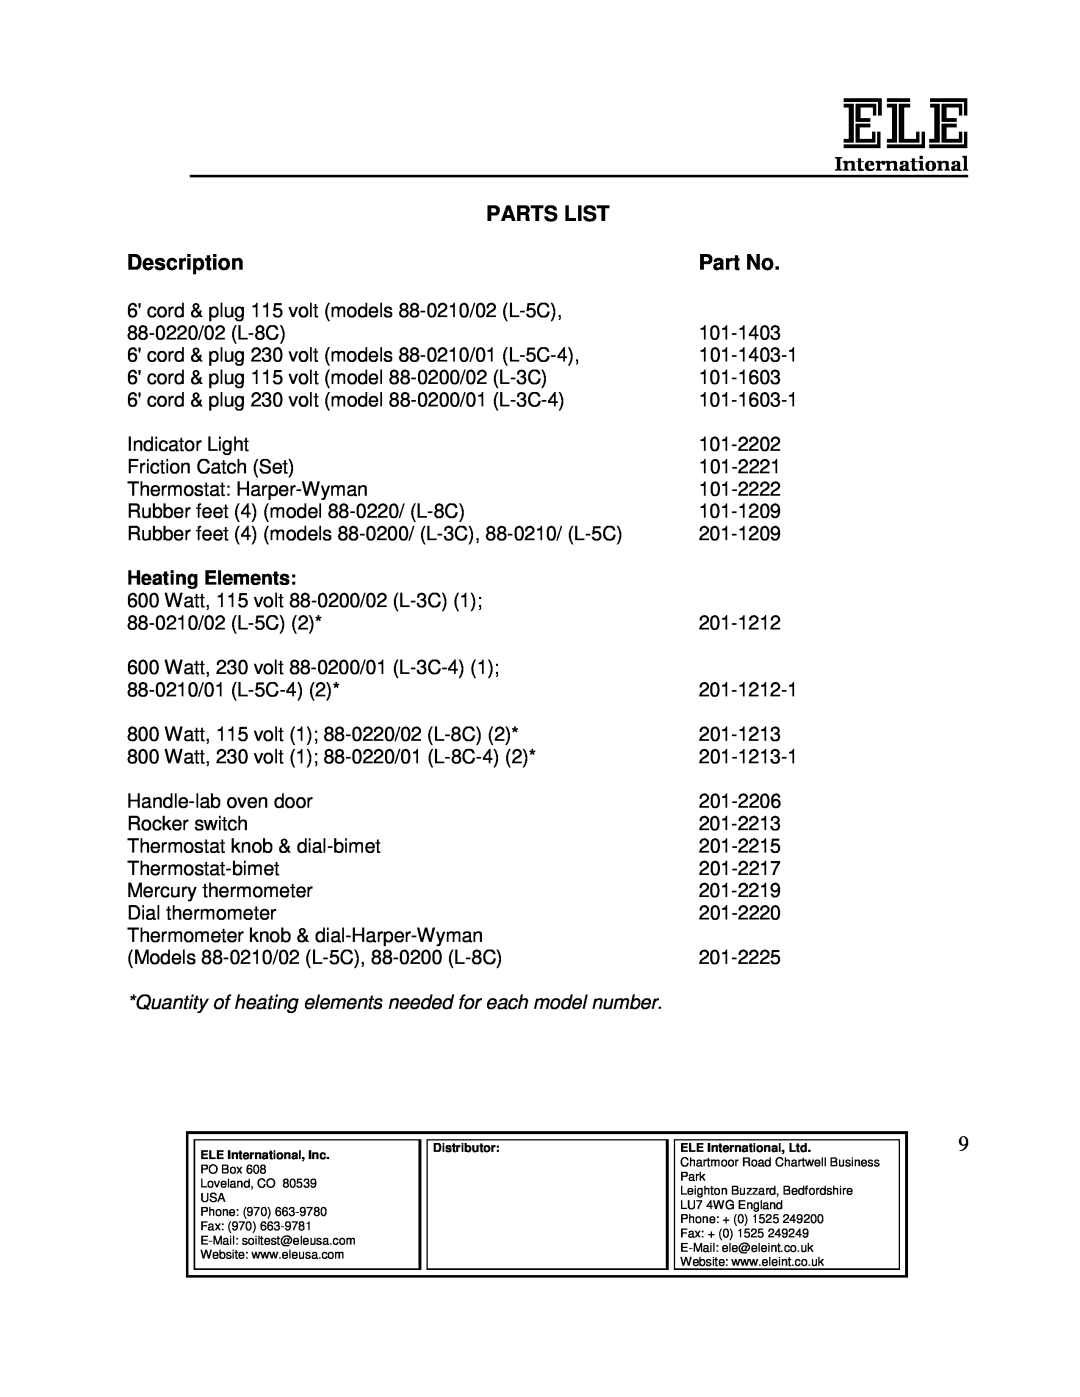 Ele 88-0200/01 (L-3C-4), 88-0210/02 (L-5C), 88-0200/02 (L-3C) manual Description, Parts List, International, Heating Elements 